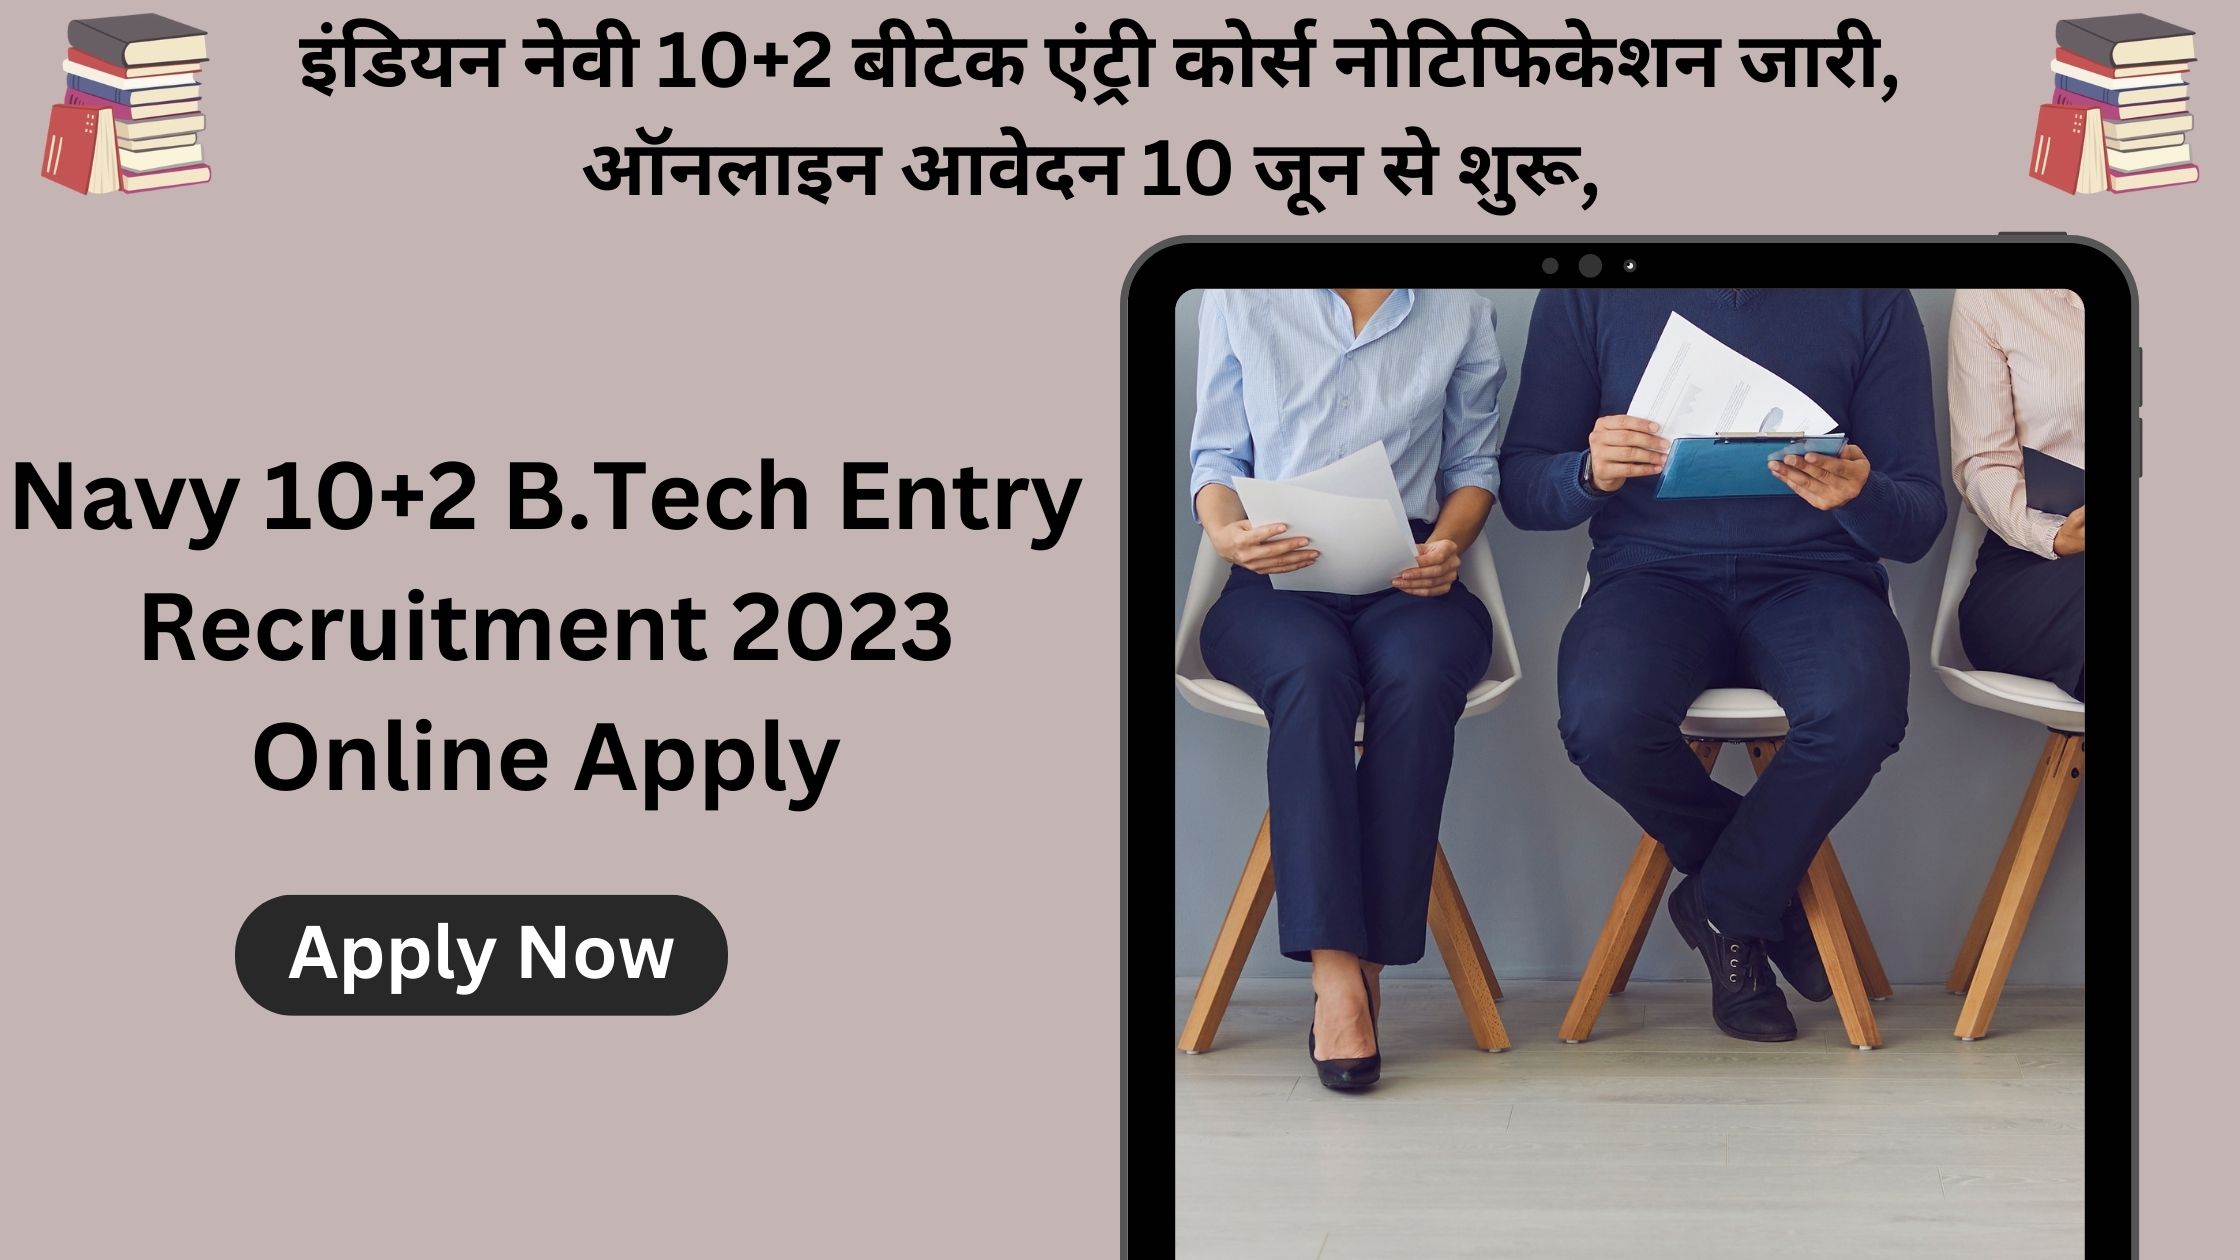 Navy 10+2 B.Tech Entry Recruitment 2023 Online Apply